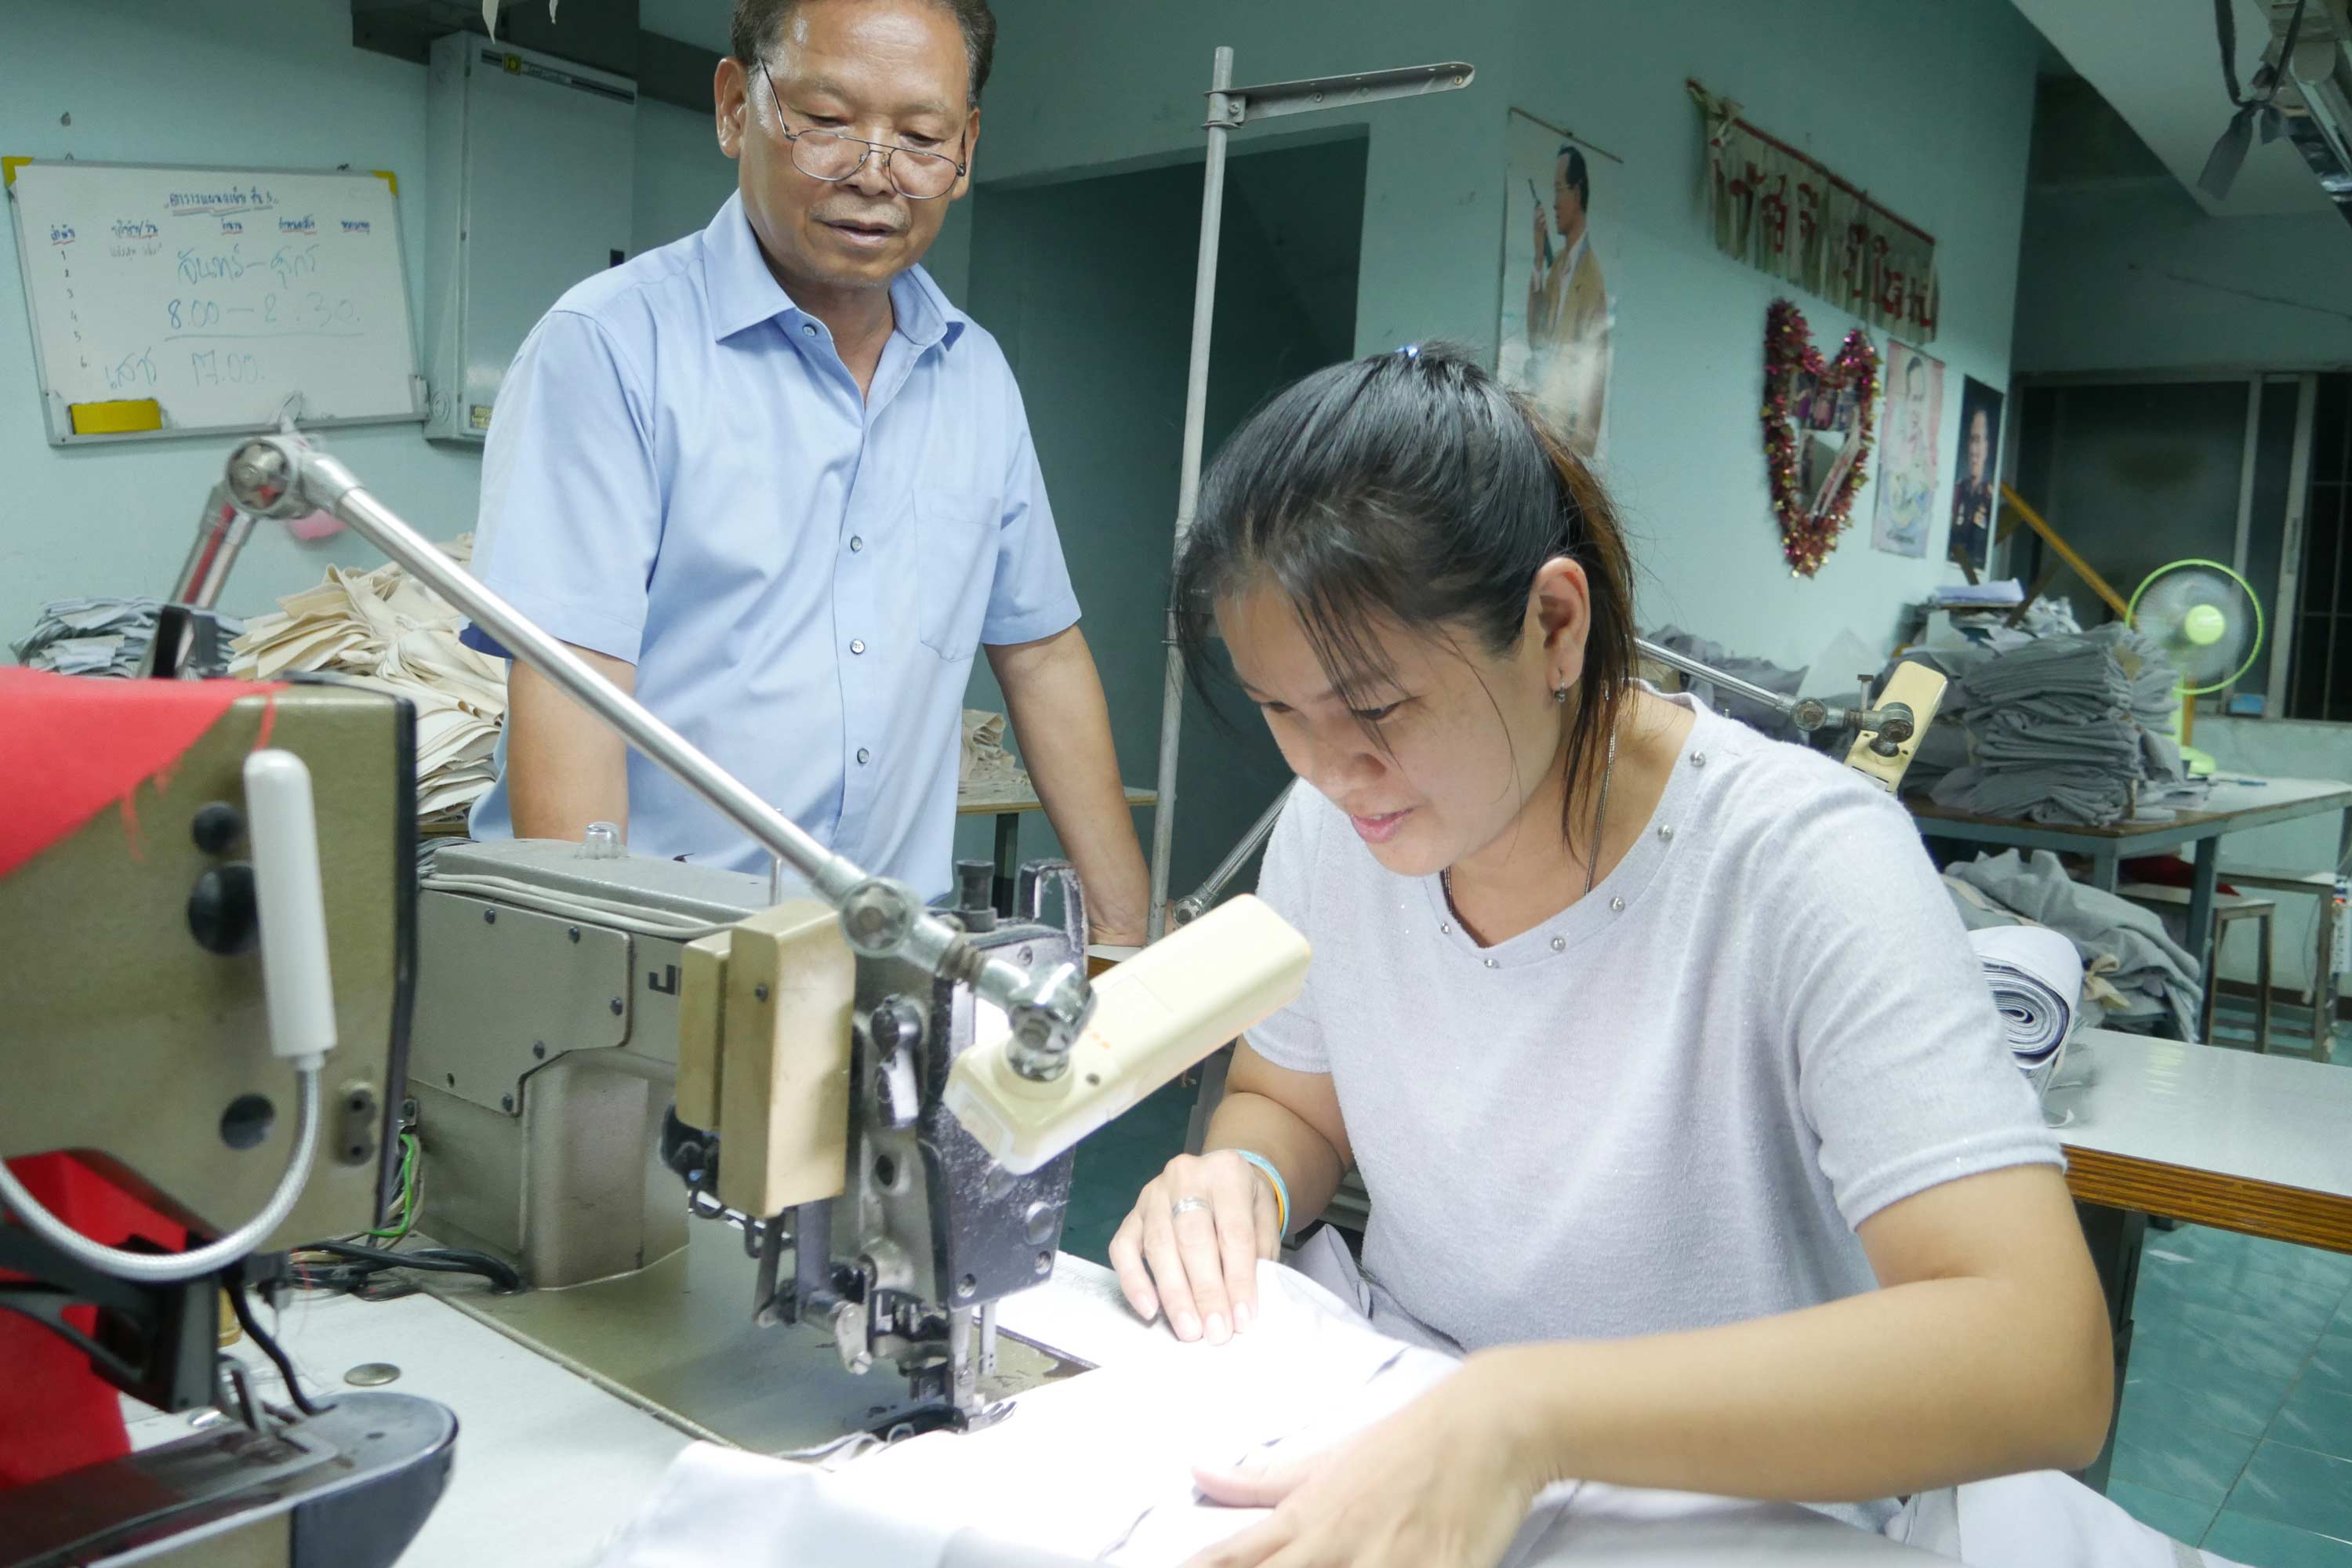 Workers in garment factory. (Shutterstock)